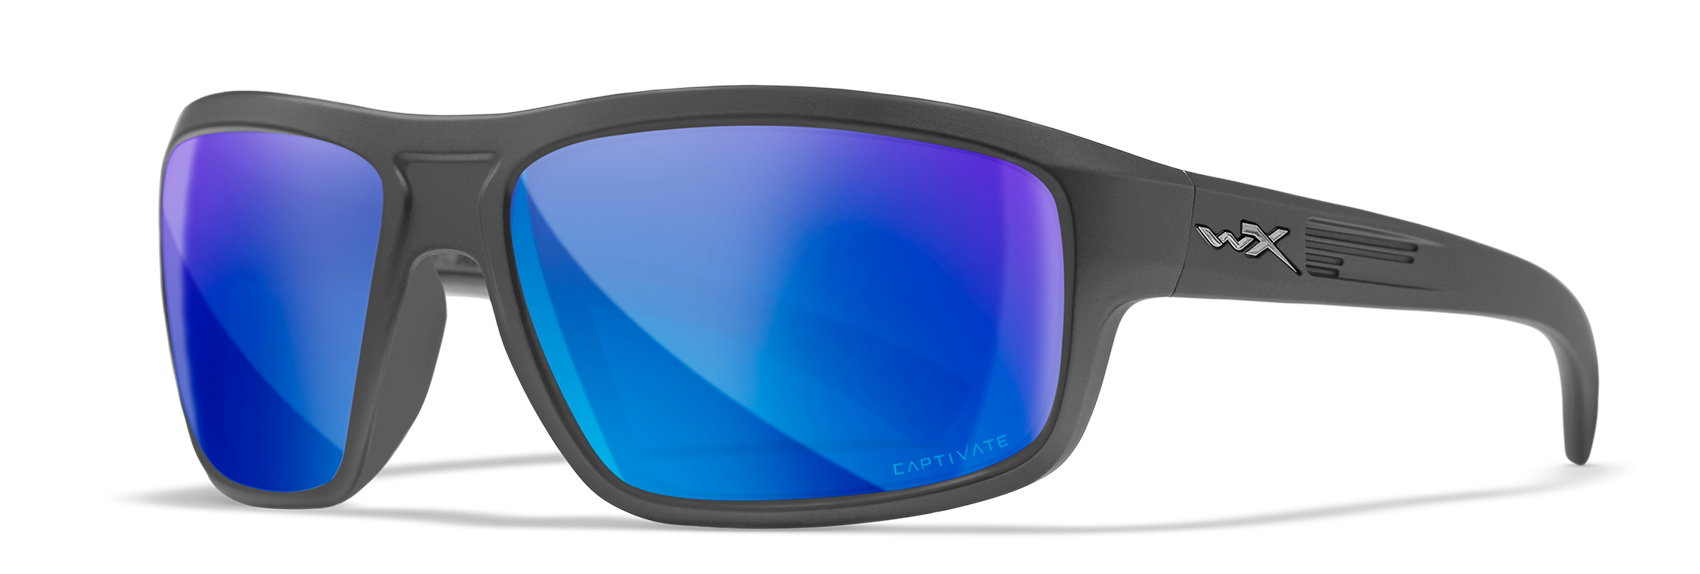 Wiley X Contend Polarized Sunglasses